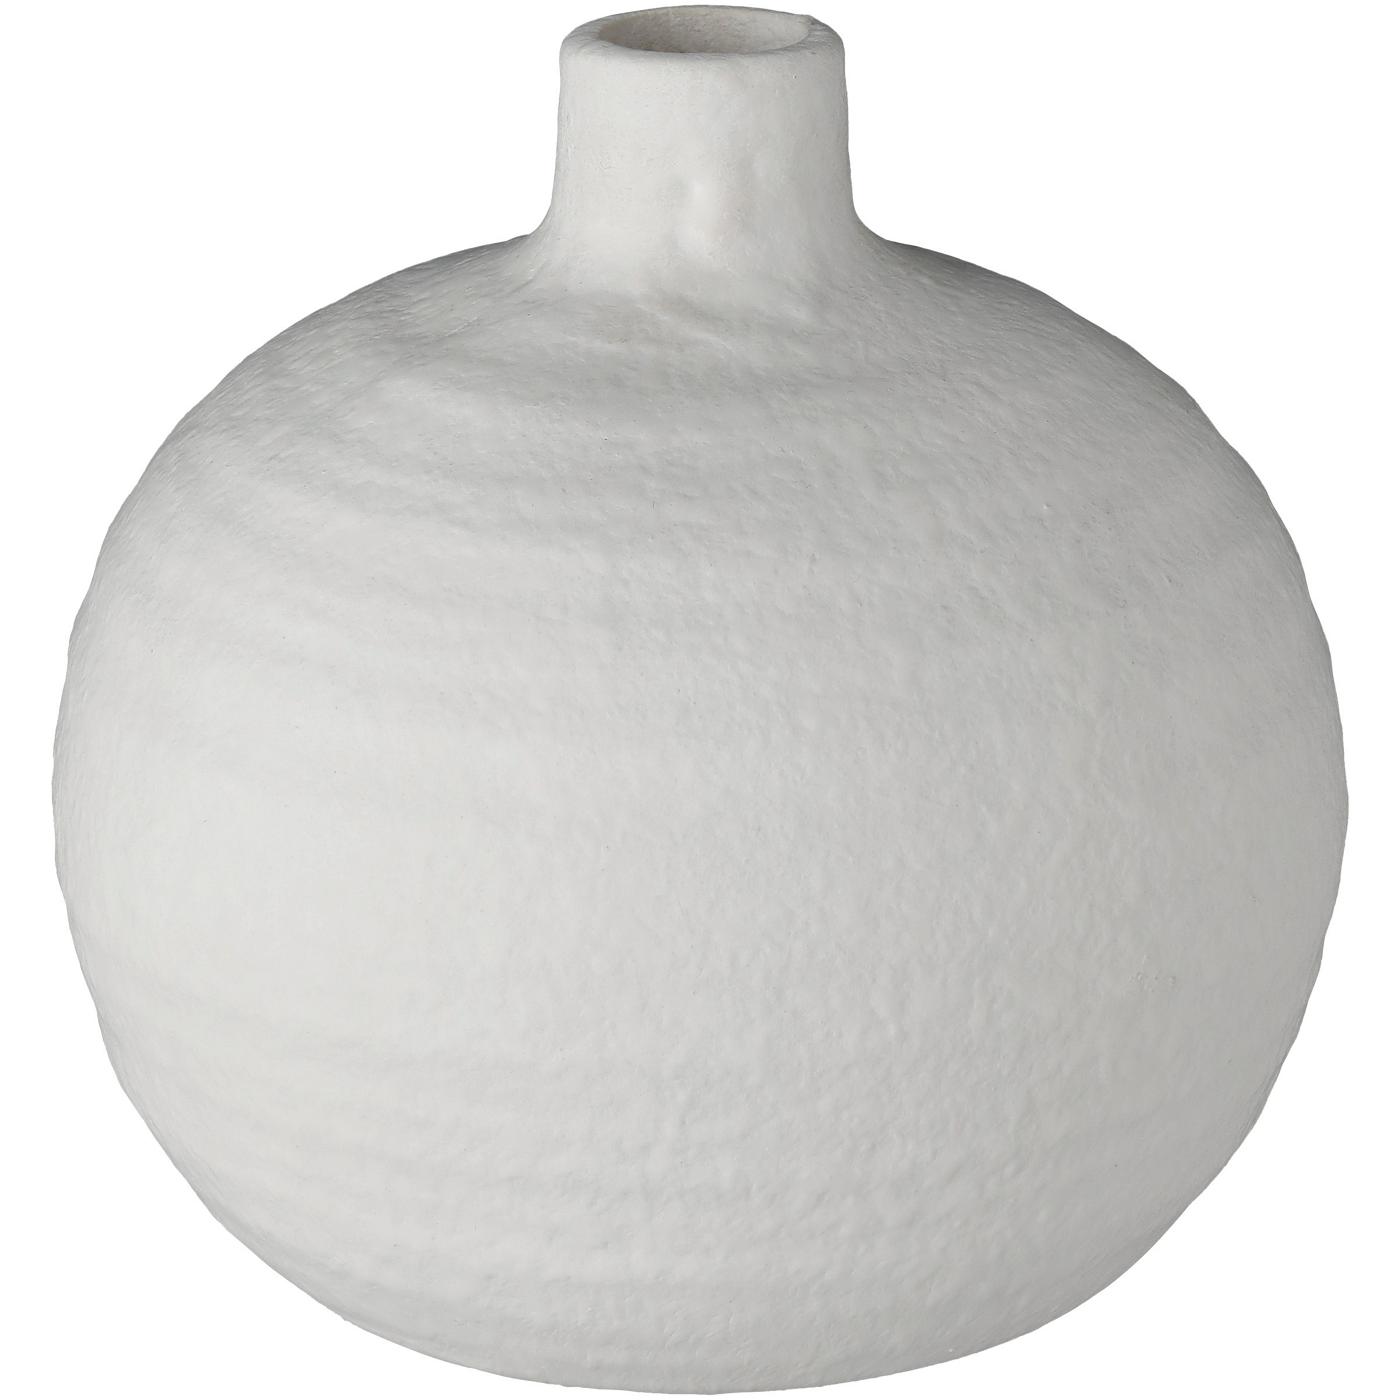 Haven + Key Round Decorative Ceramic Vase - White; image 1 of 2